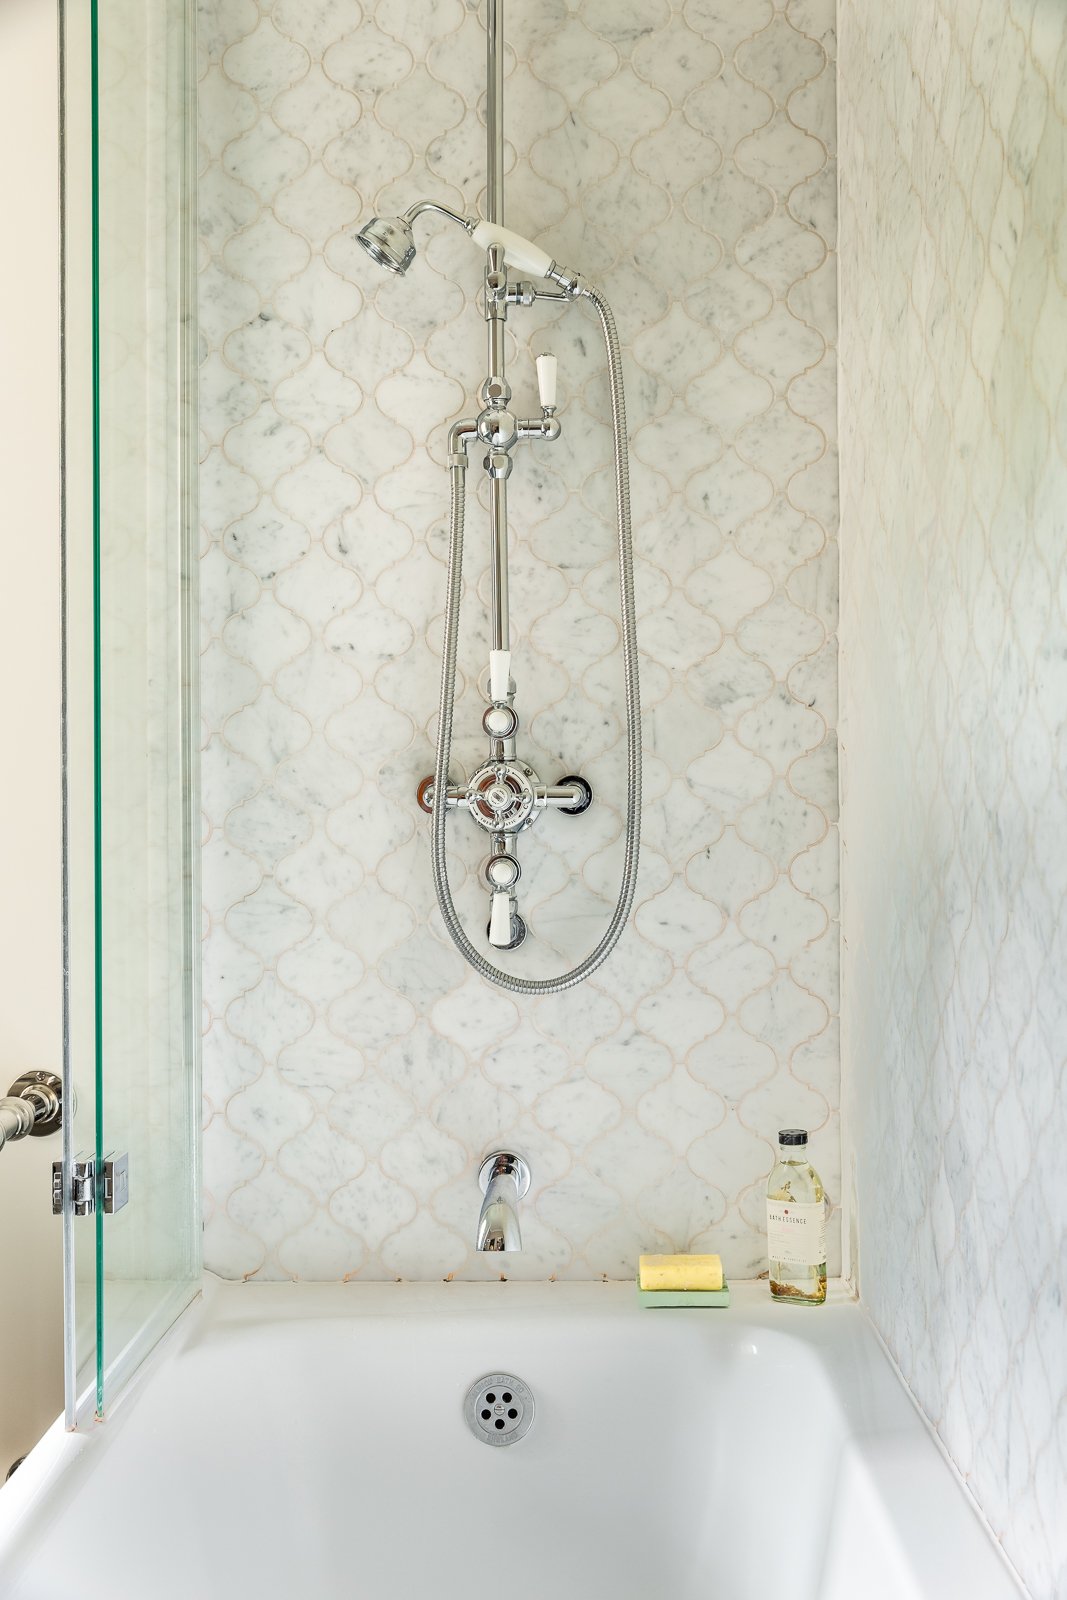 CharlotteBucciero-interiors-shower-marble-tile-grey-bath-hand-shower.jpg